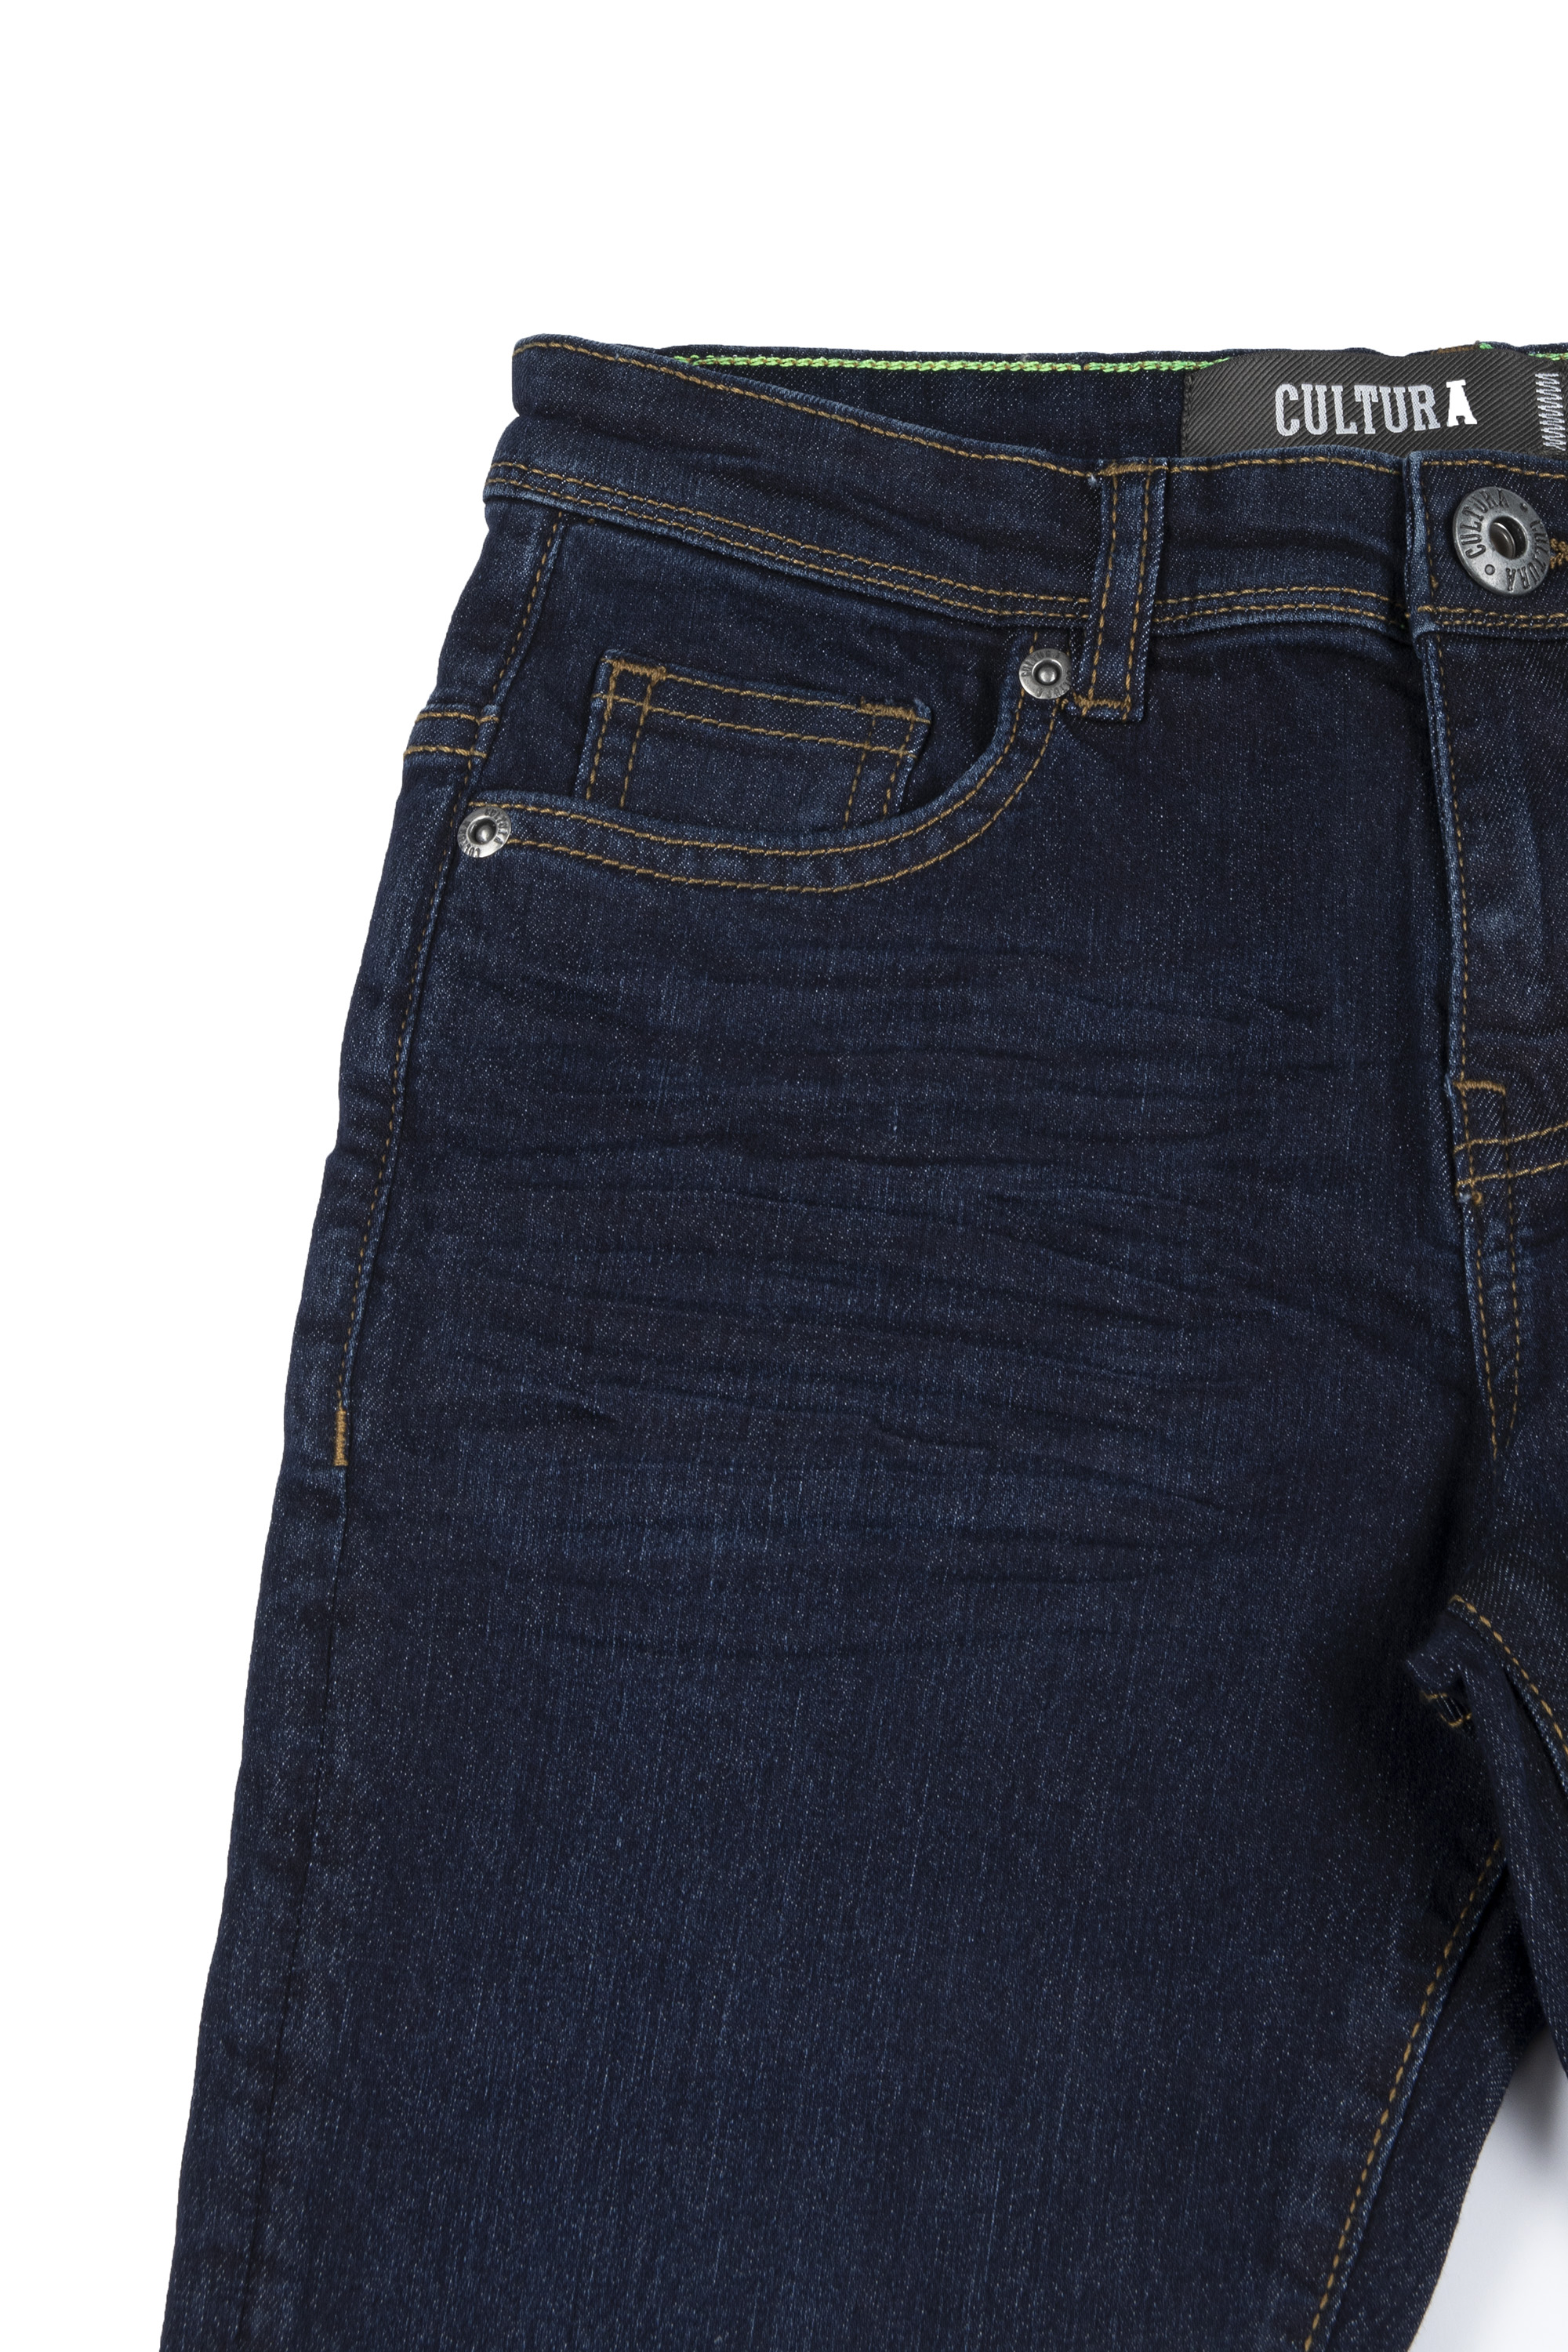 CULTURA Skinny Jeans for Little Comfy 5 Dark Blue Denim Size Slim Age Boys Stitch, Accent Pants, 3-7, Wash Stretch